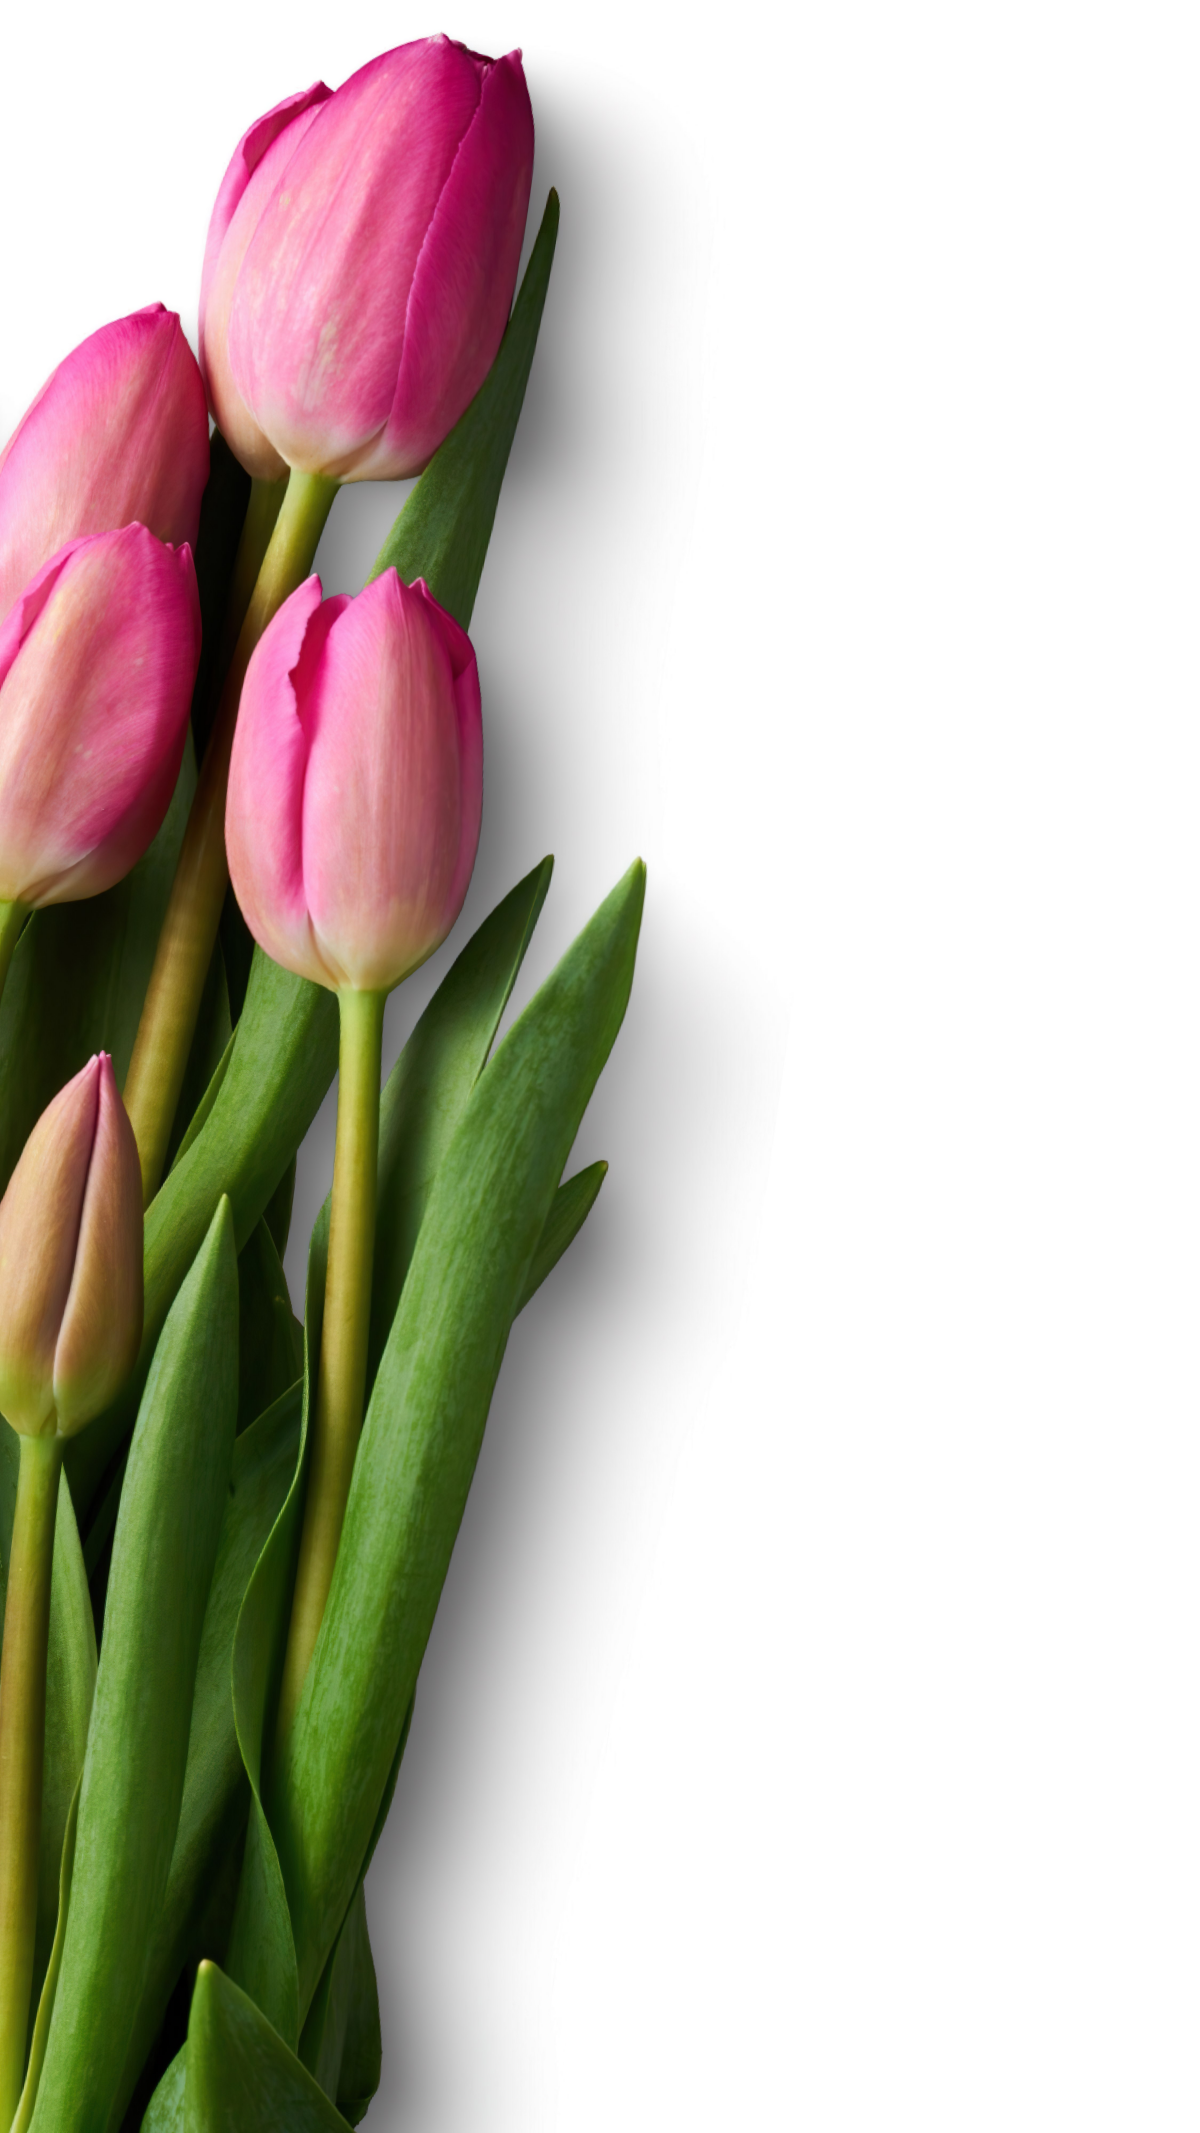 auswahl an duengemitteln fuer tulpen und narzissen